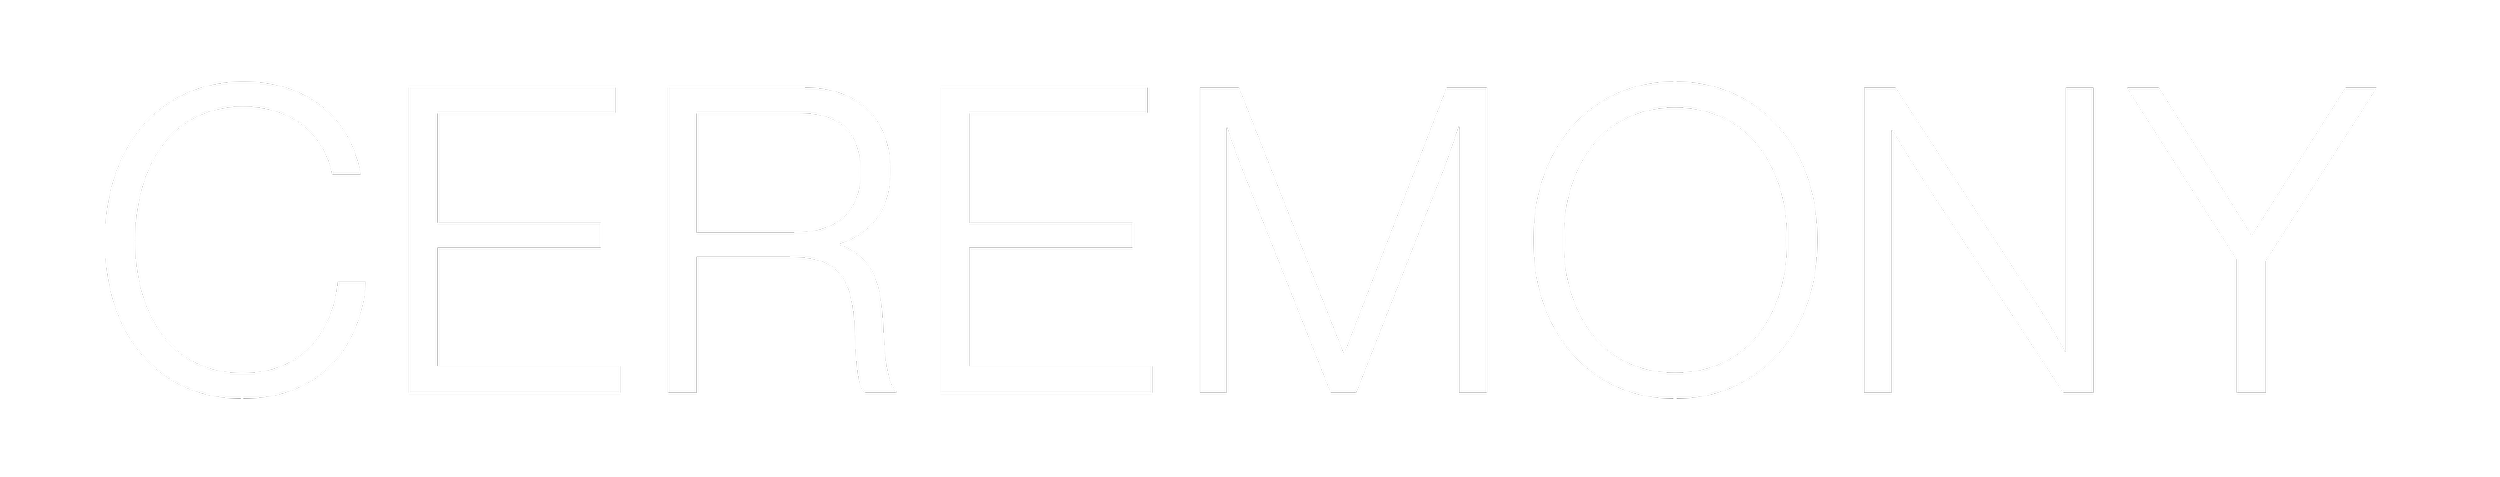 Entry #18 by Tamim002 for Design a Logo for Emcee (Master of Ceremonies)  agency | Freelancer